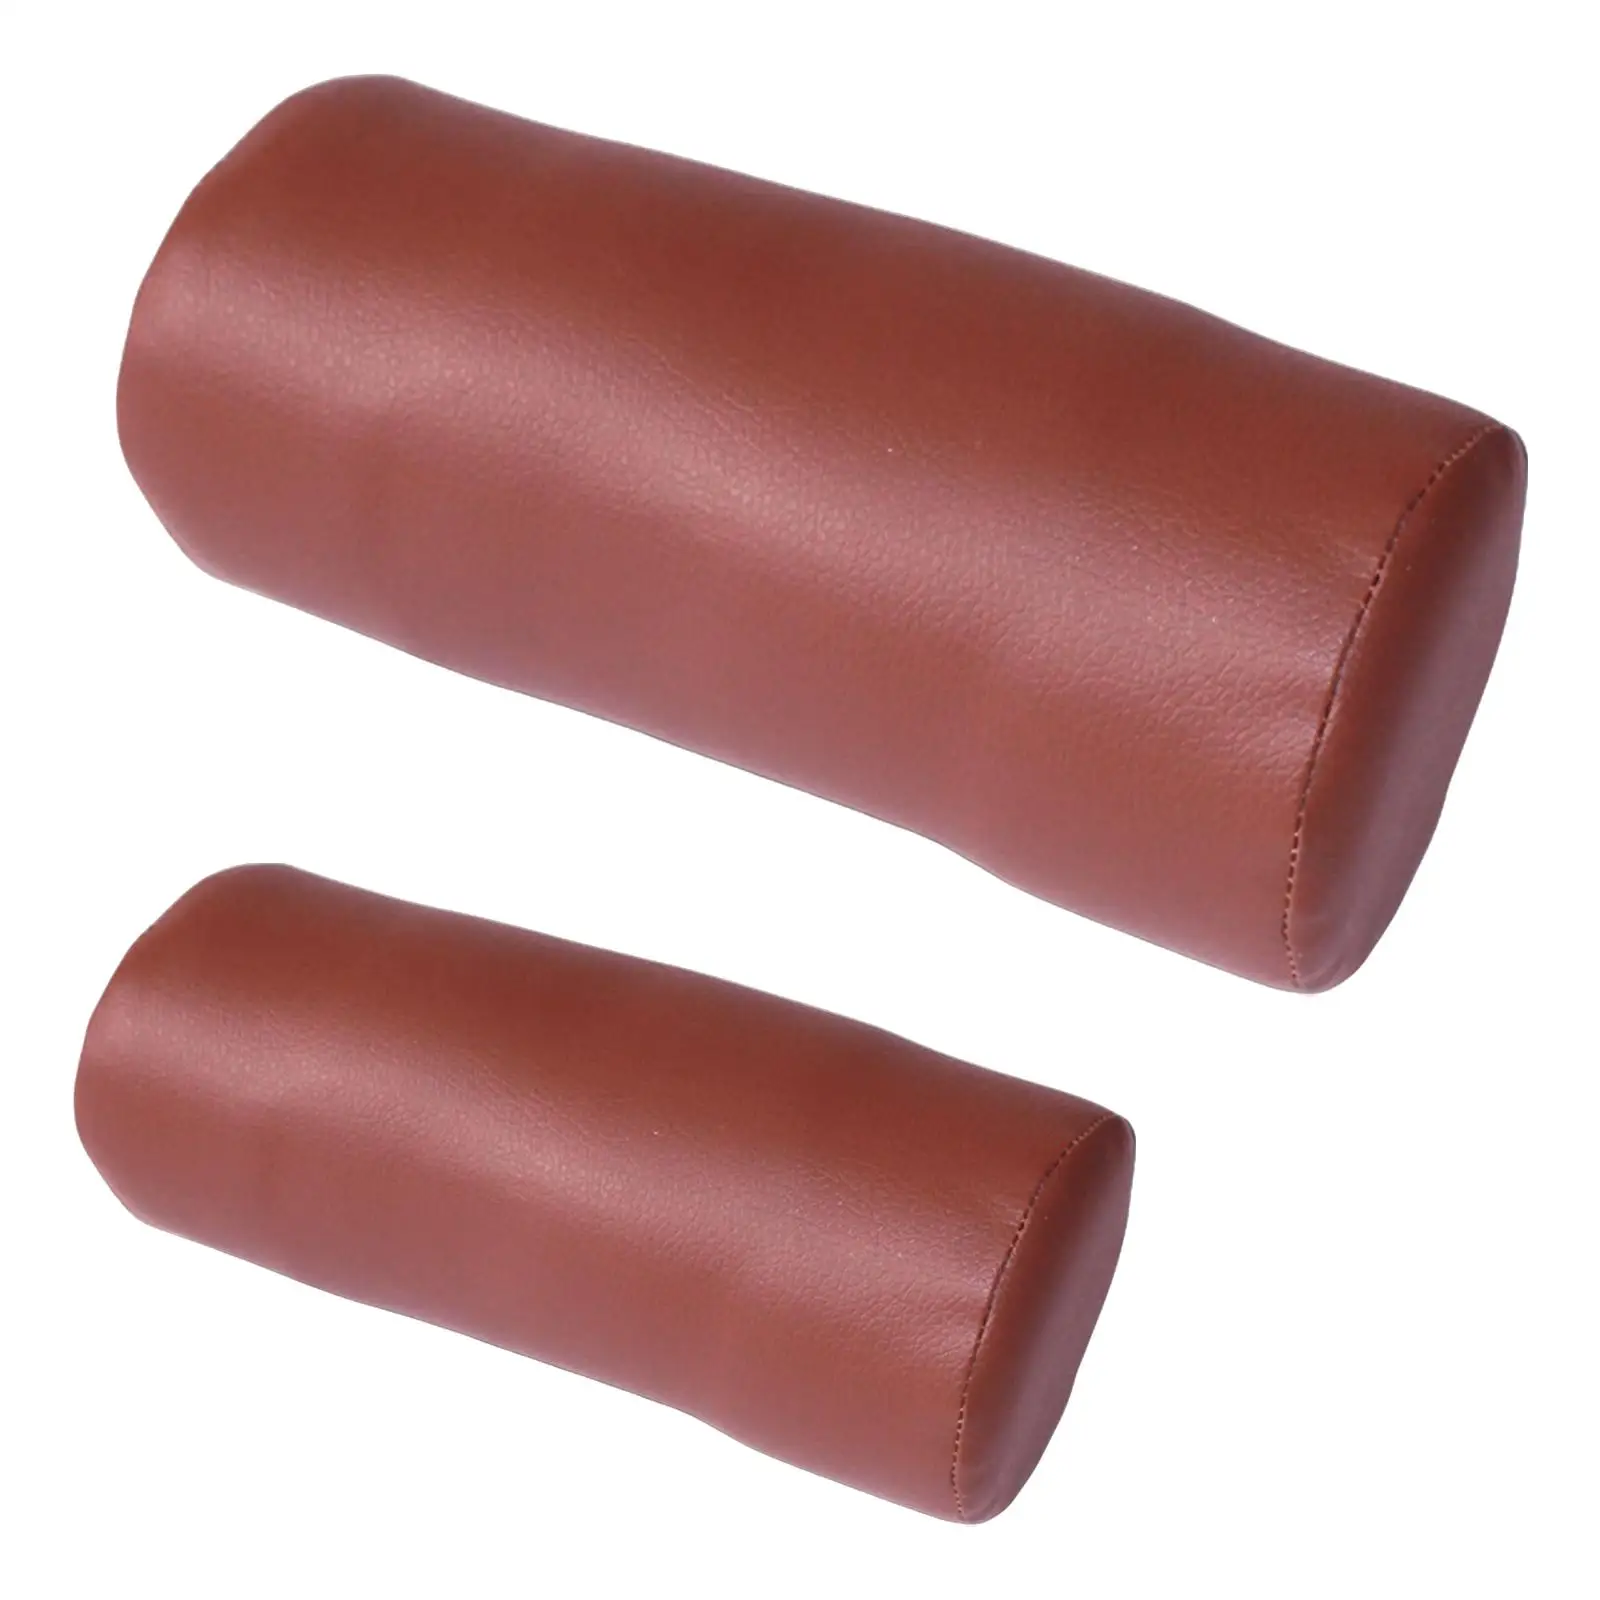 Soft Cylinder  Support PU Leather Adjustable Inserts Cushion Pad for Back Neck Sleep  Sponge Padding Bolster  Brown